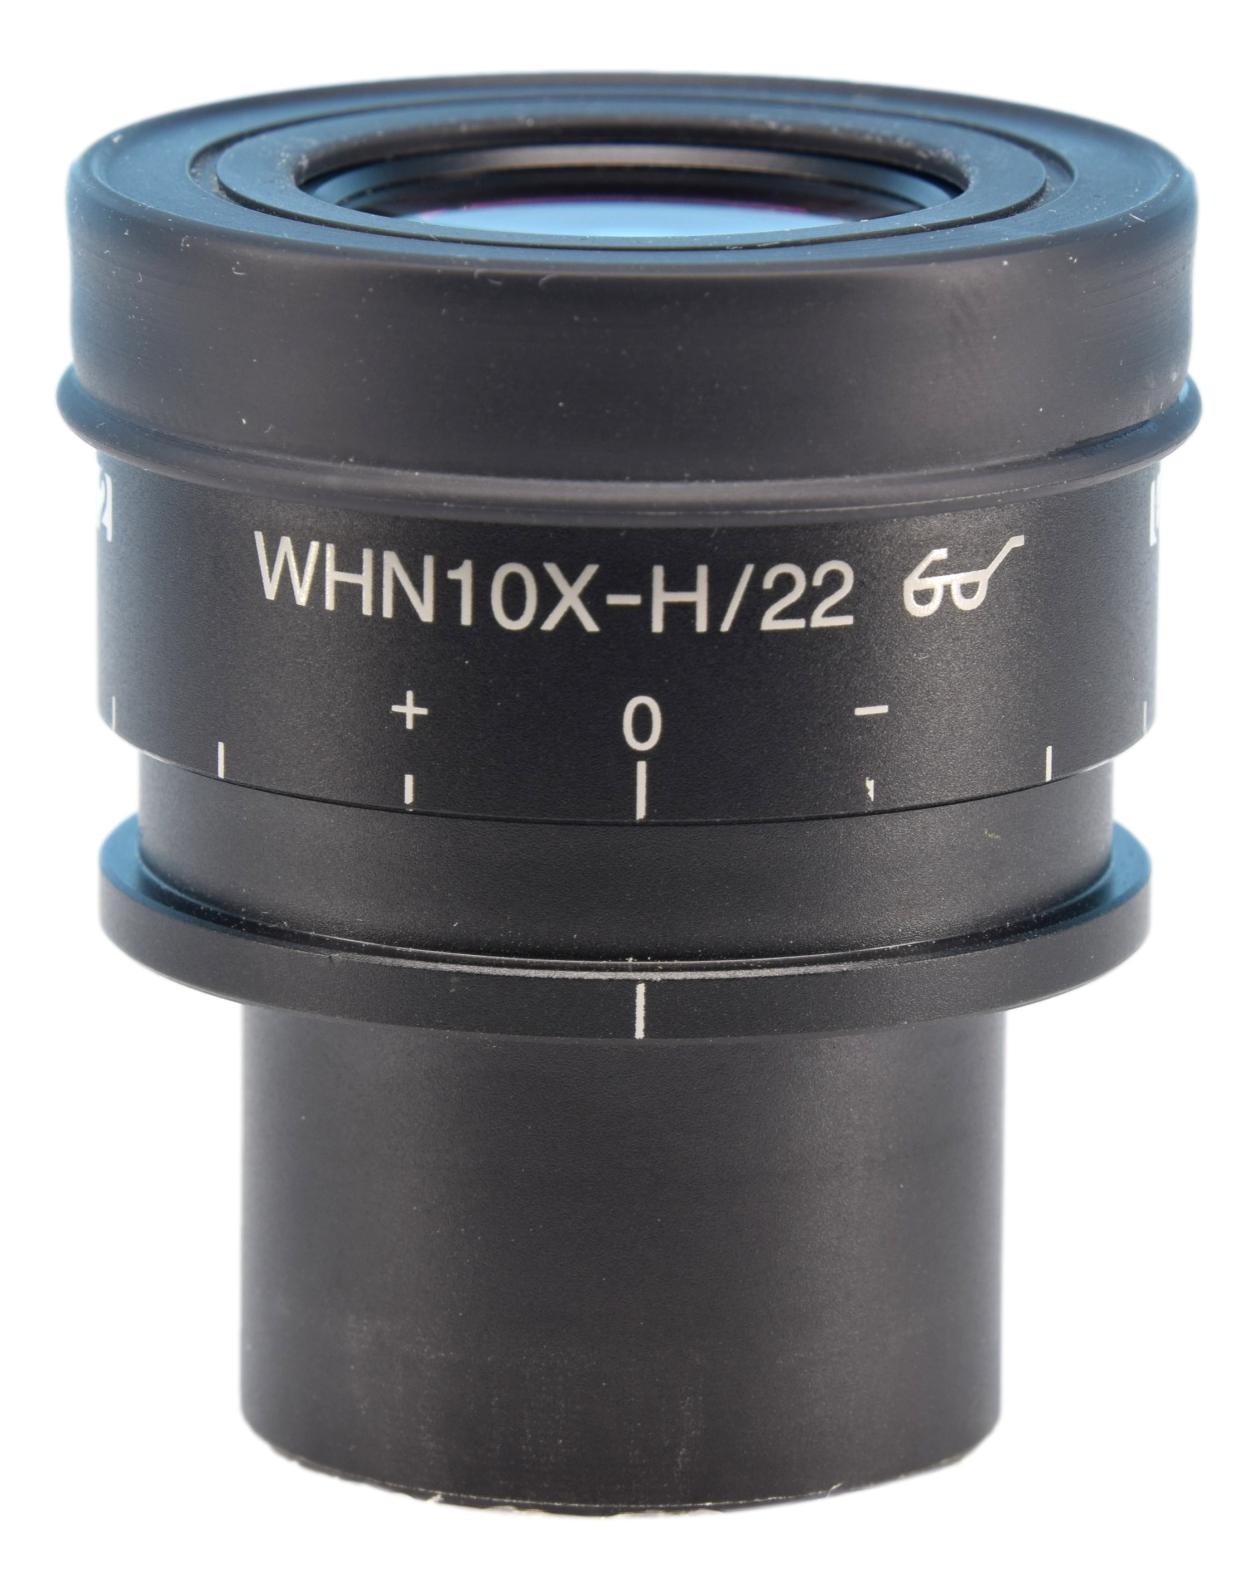 Olympus WHN10X-H/22 Focusing Eyepiece – Microscope Central